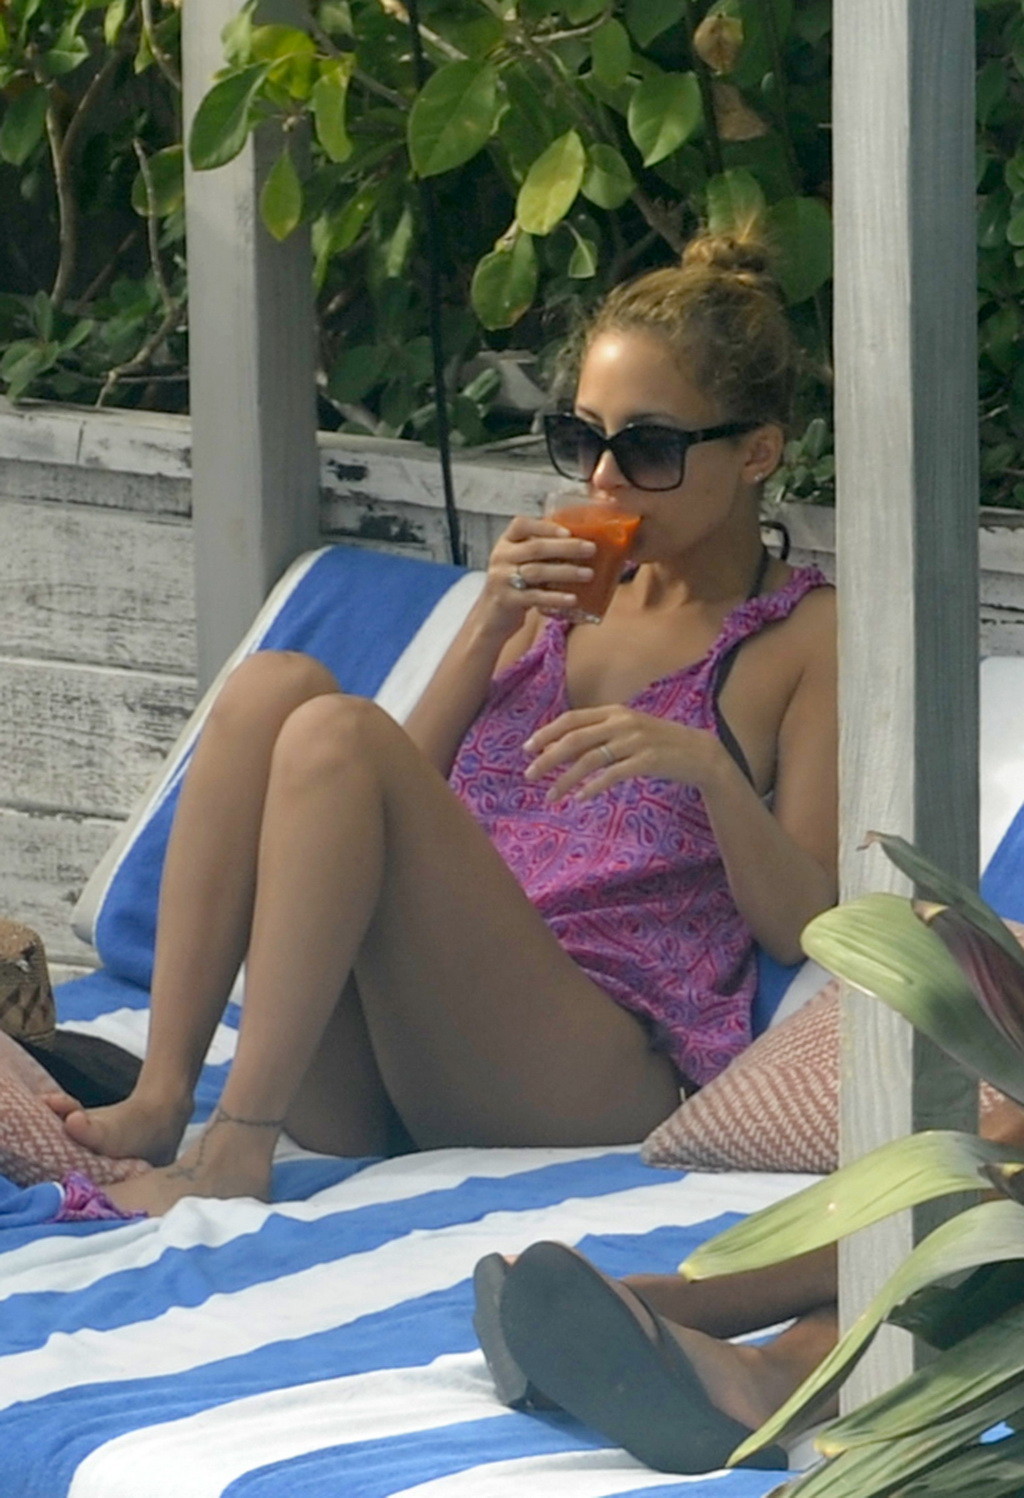 Amazing Nicole Richie showing her hot body in bikini at the pool in Miami #75269606